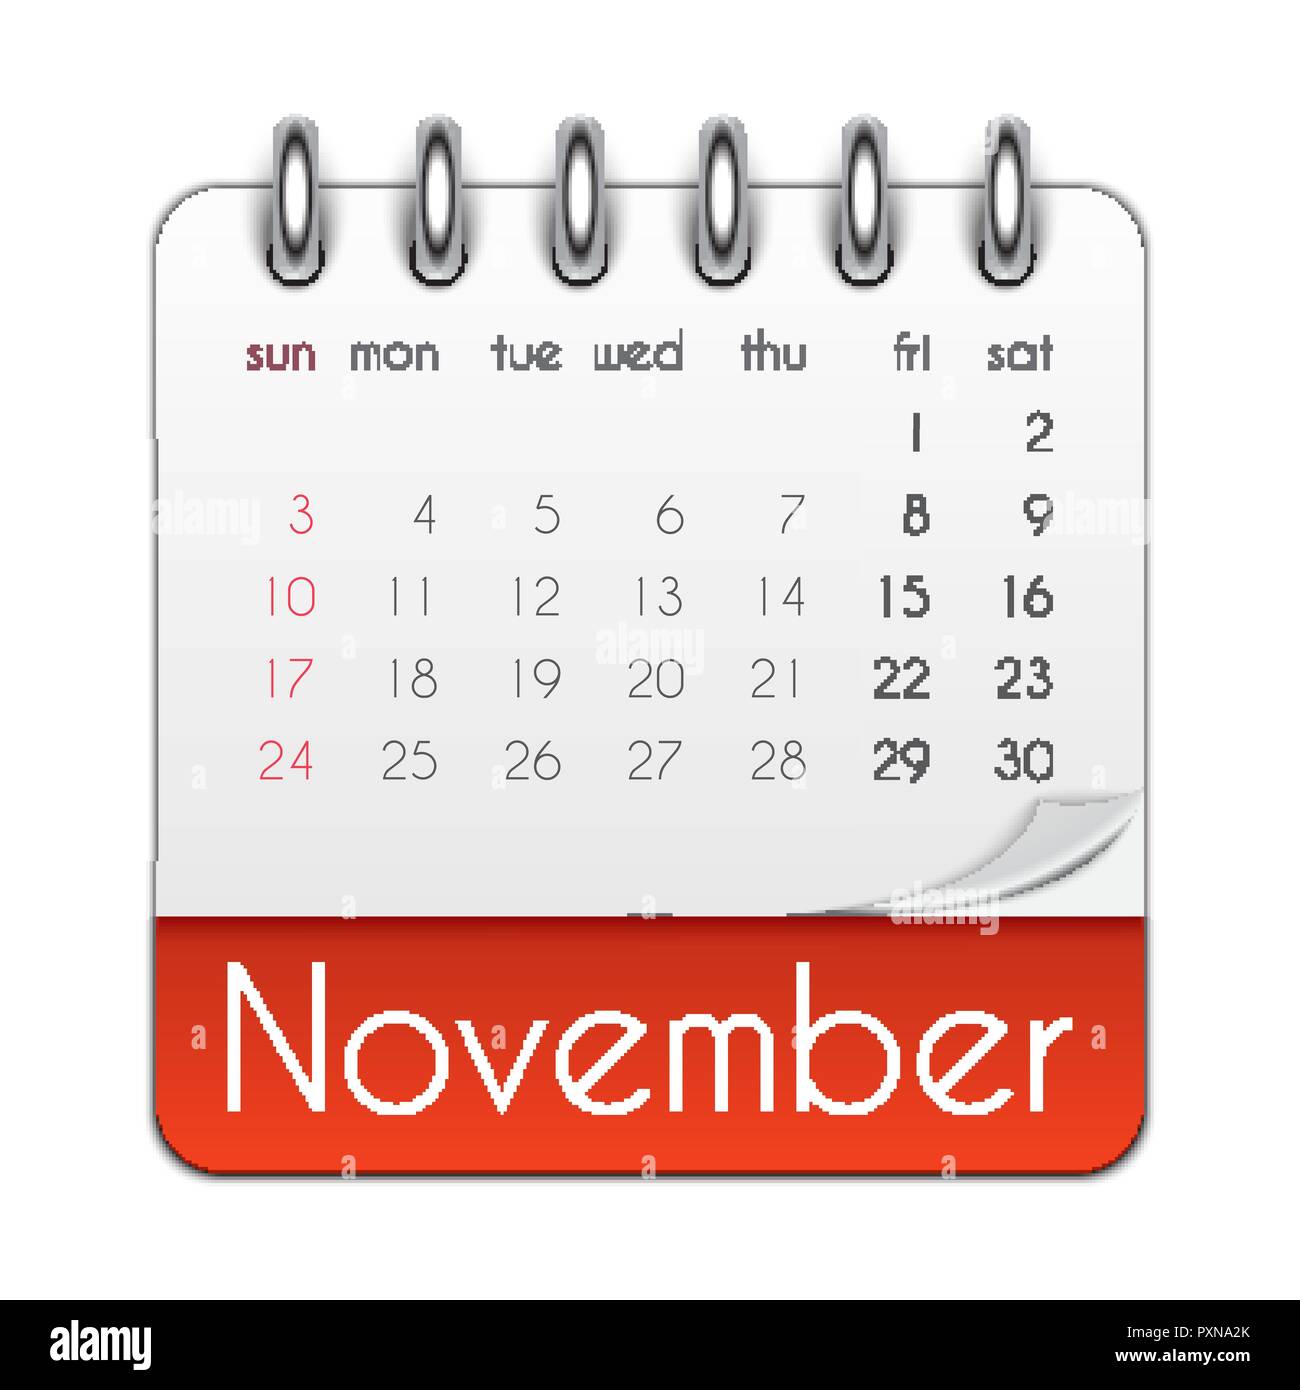 november-2019-calendar-leaf-template-vector-illustration-stock-vector